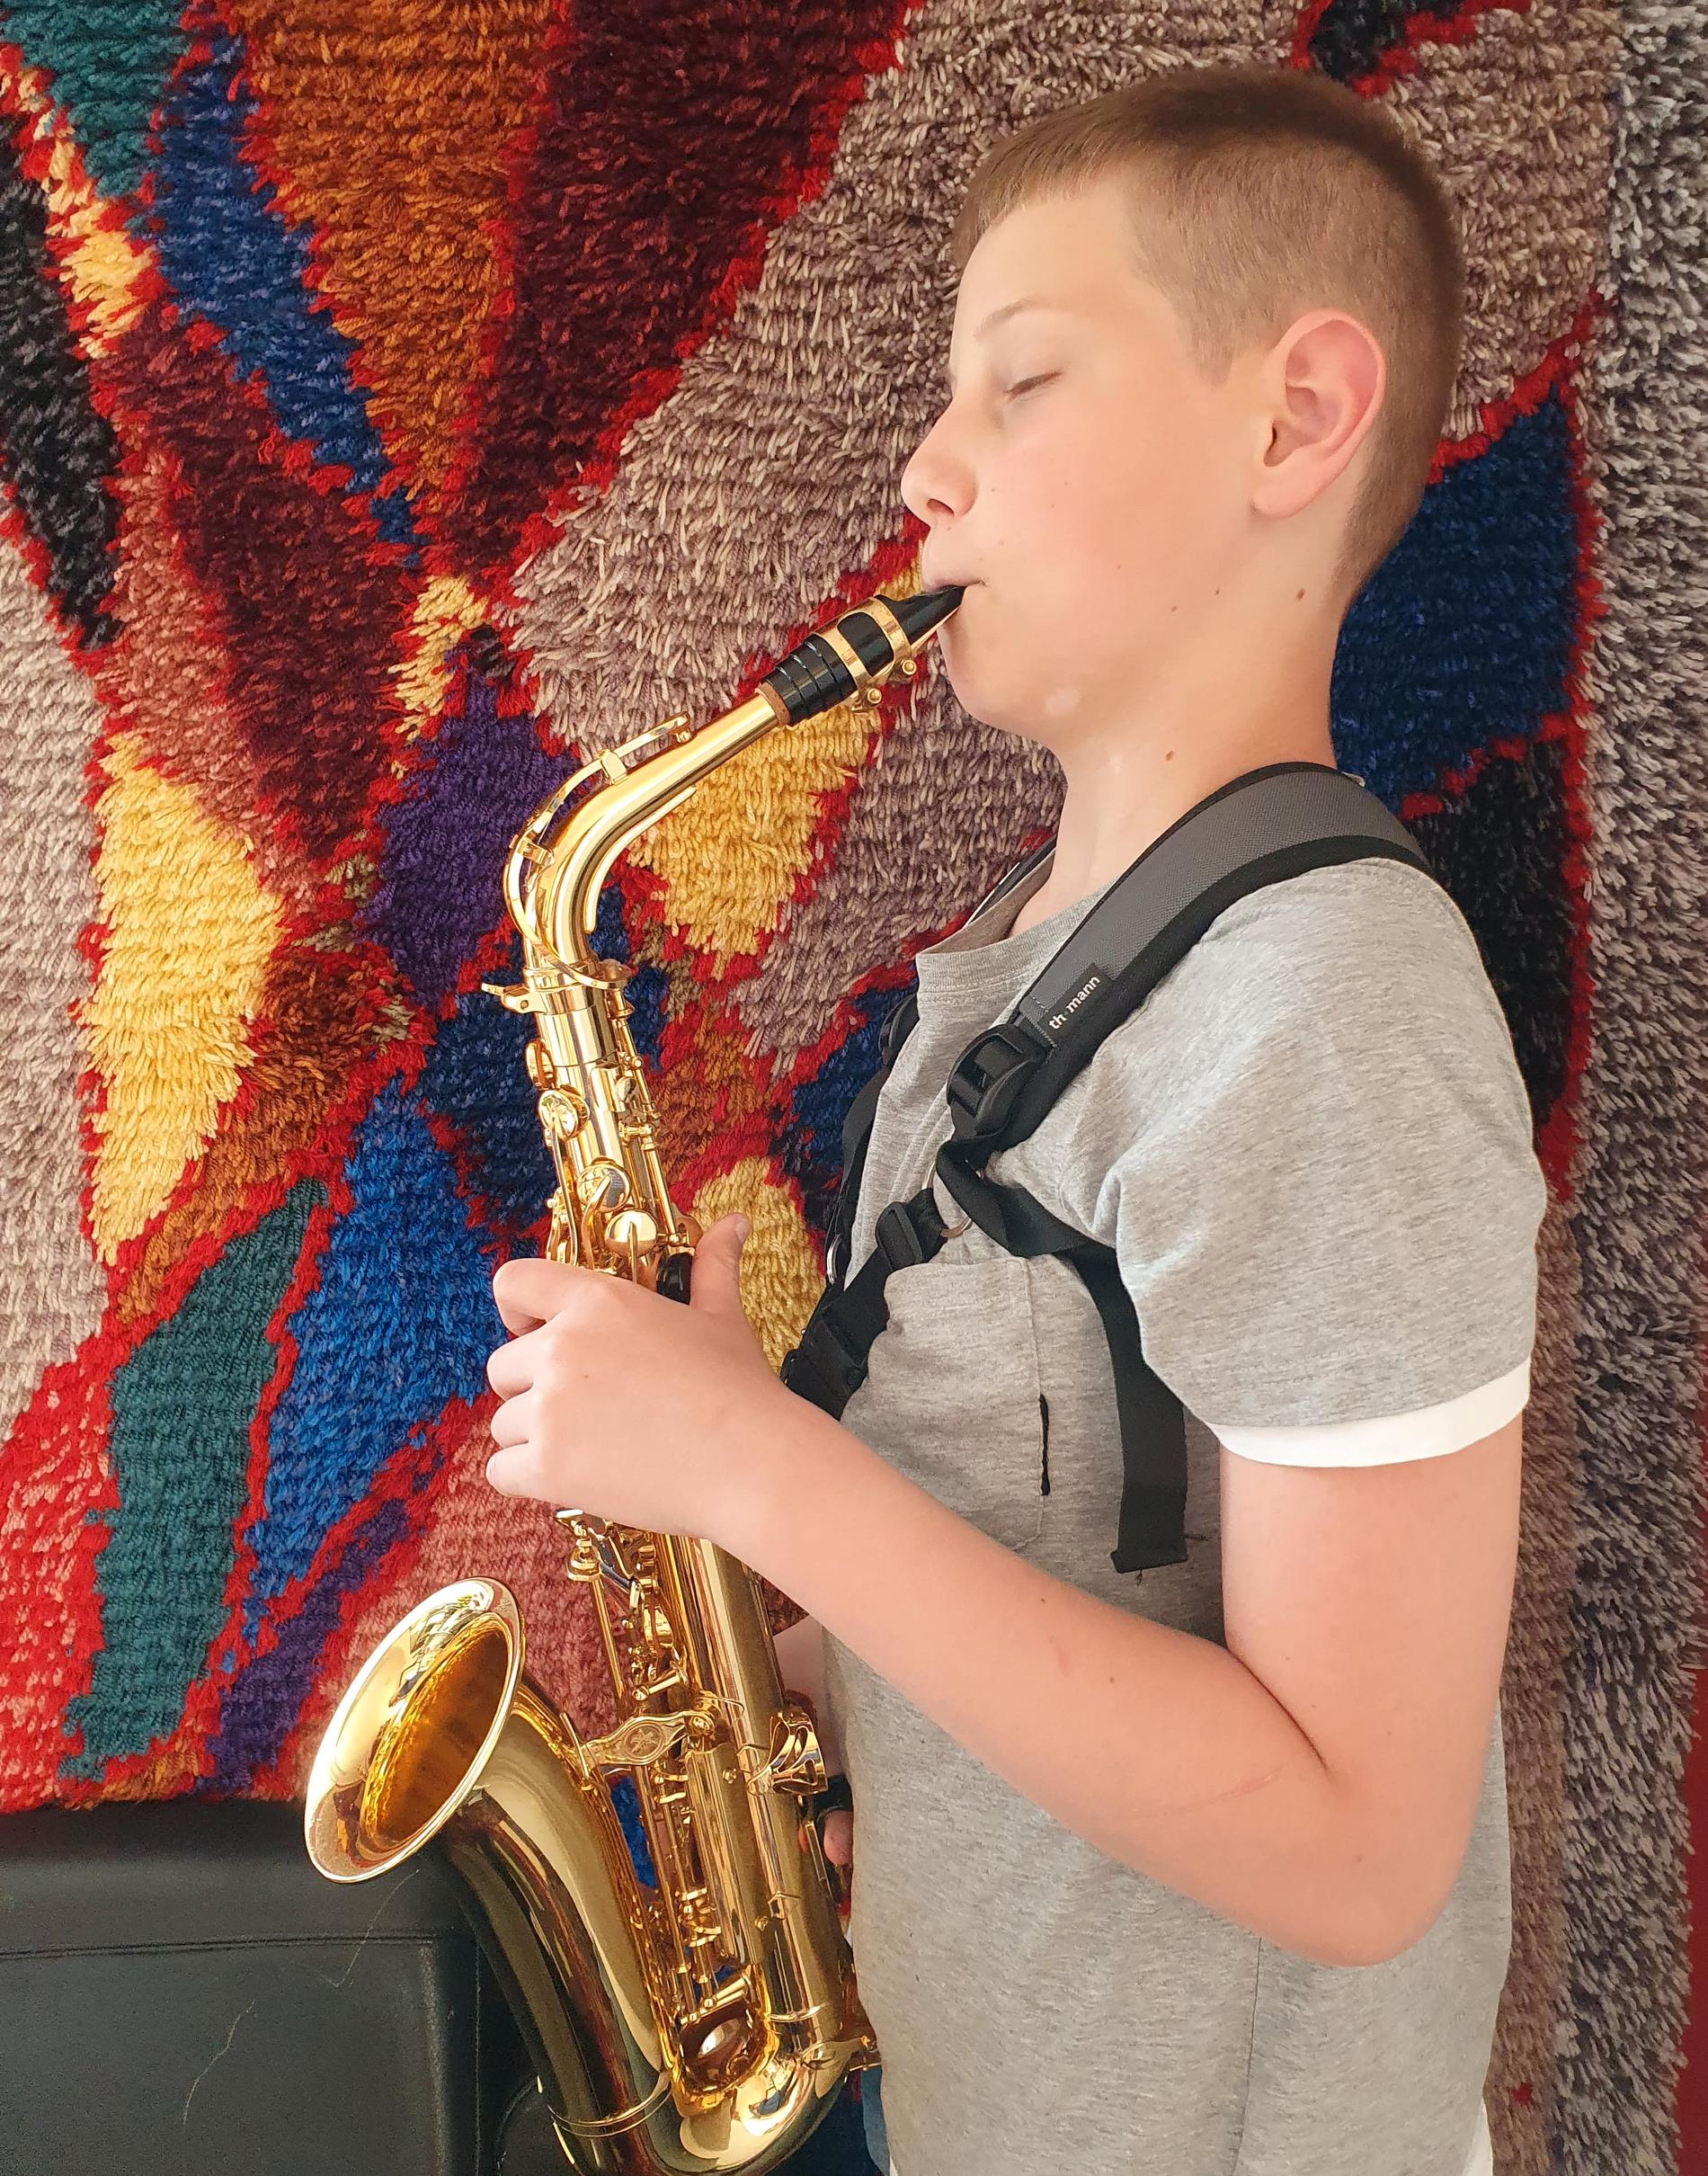 Gabriel med favoritinstrumentet saxofon.